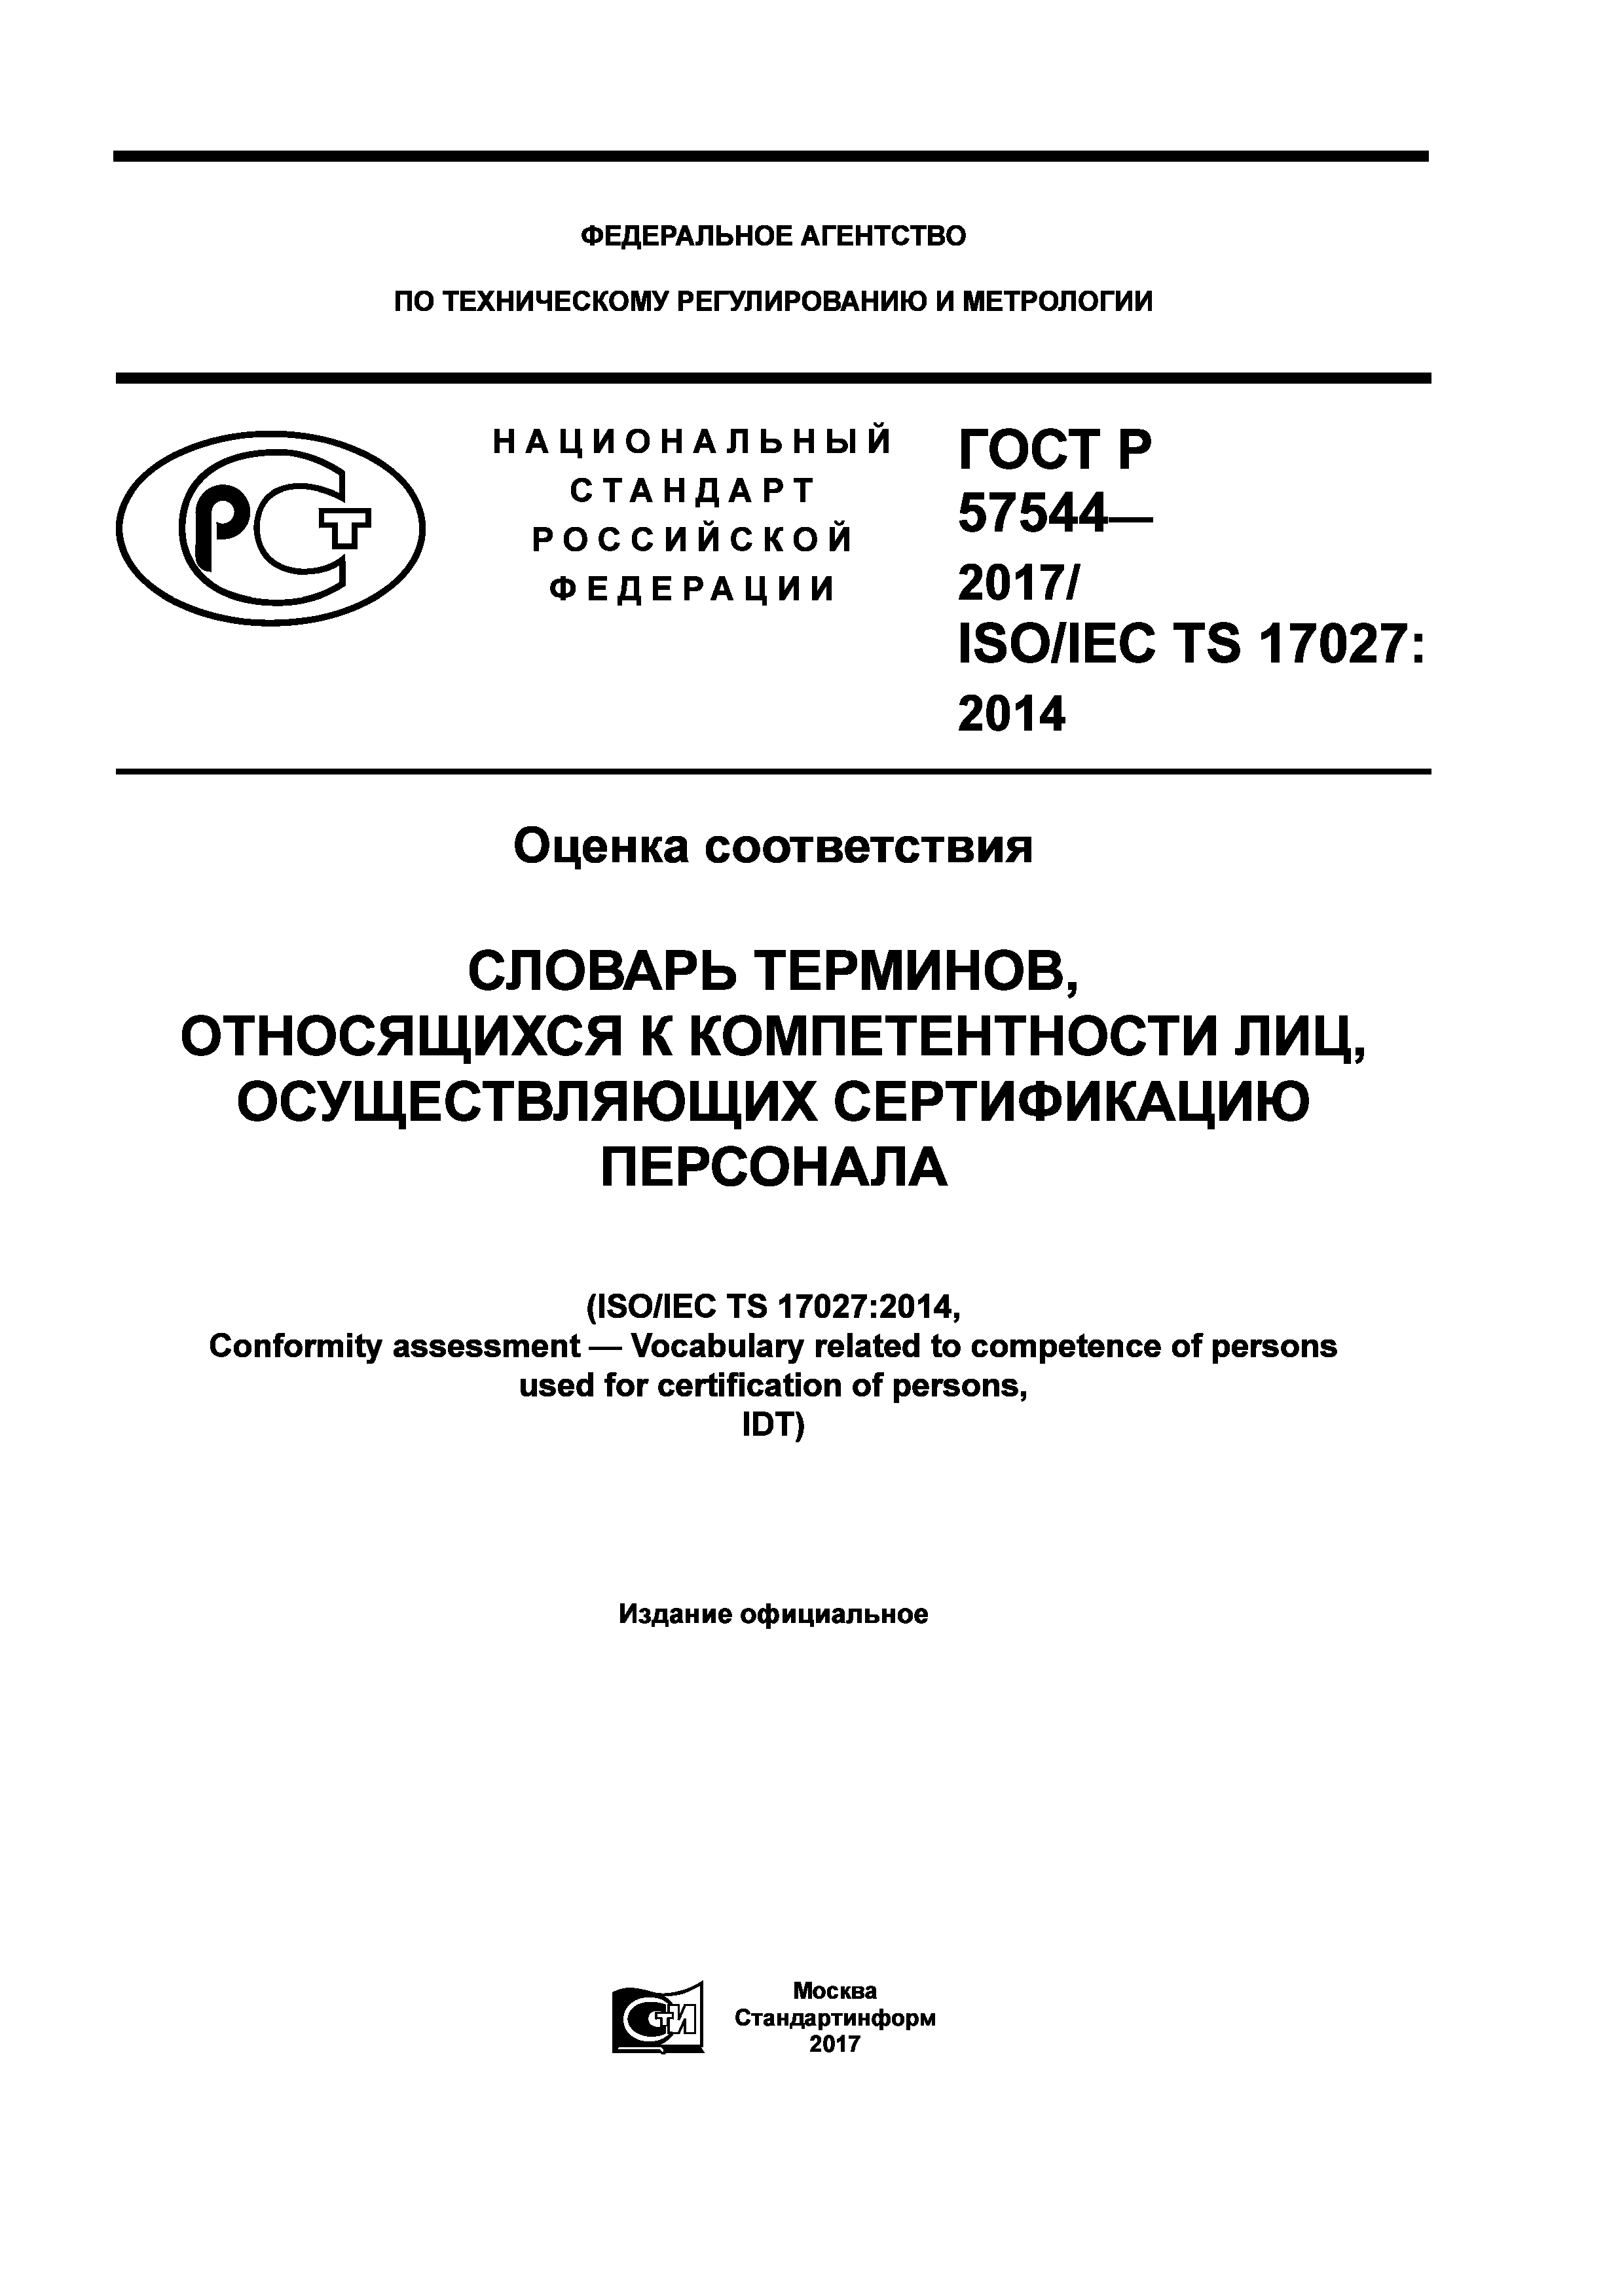 ГОСТ Р 57544-2017